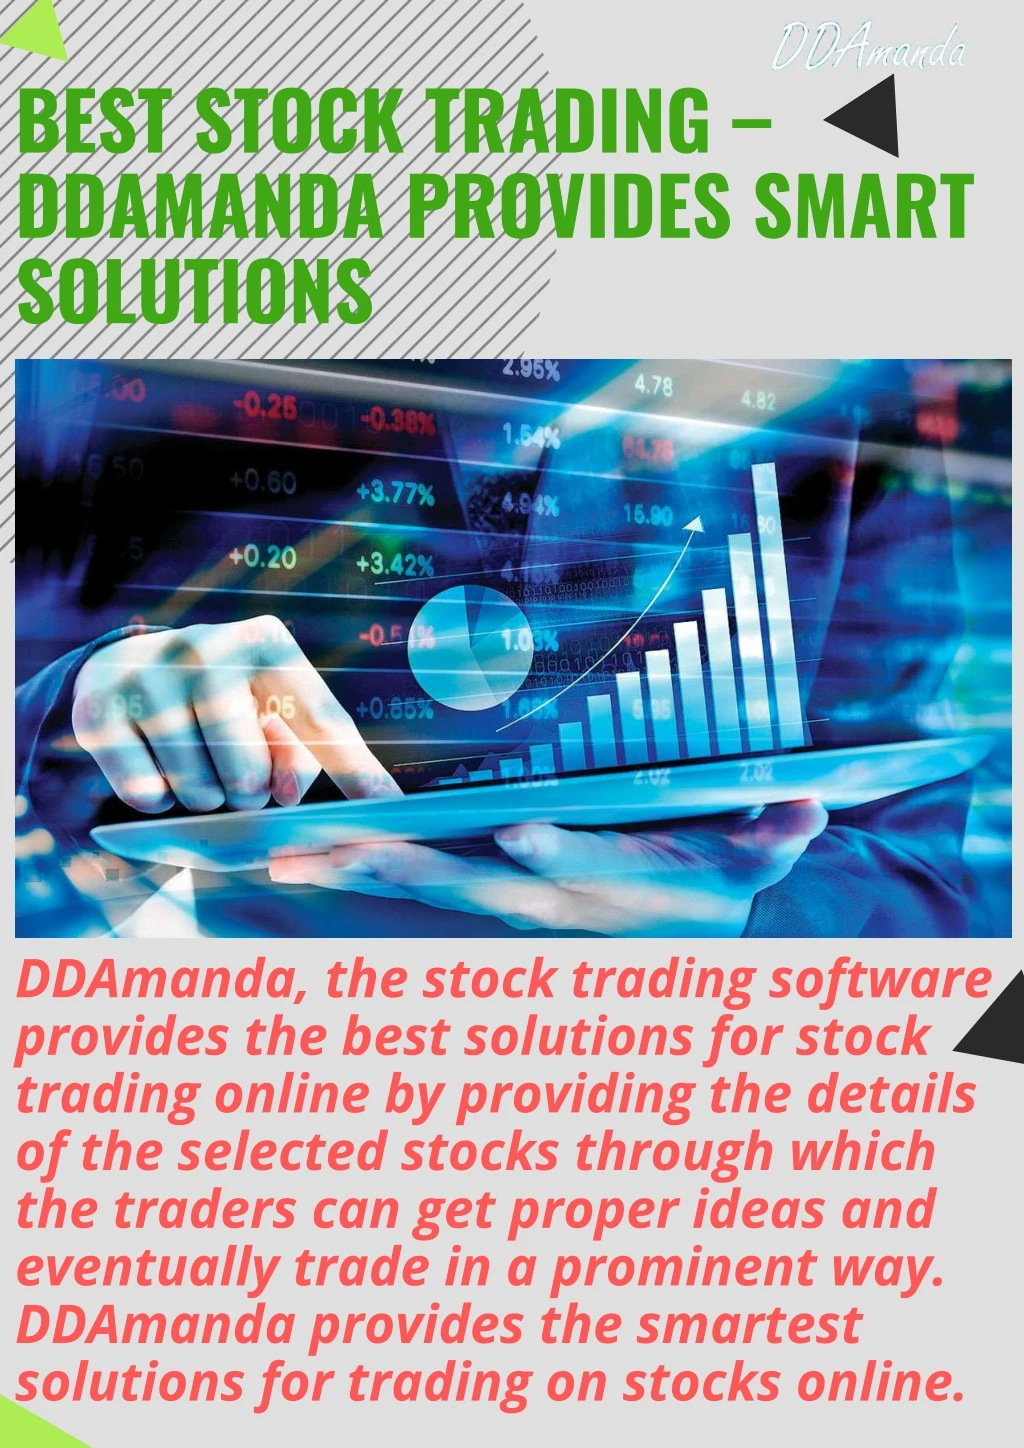 best stock trading ddamanda provides smart